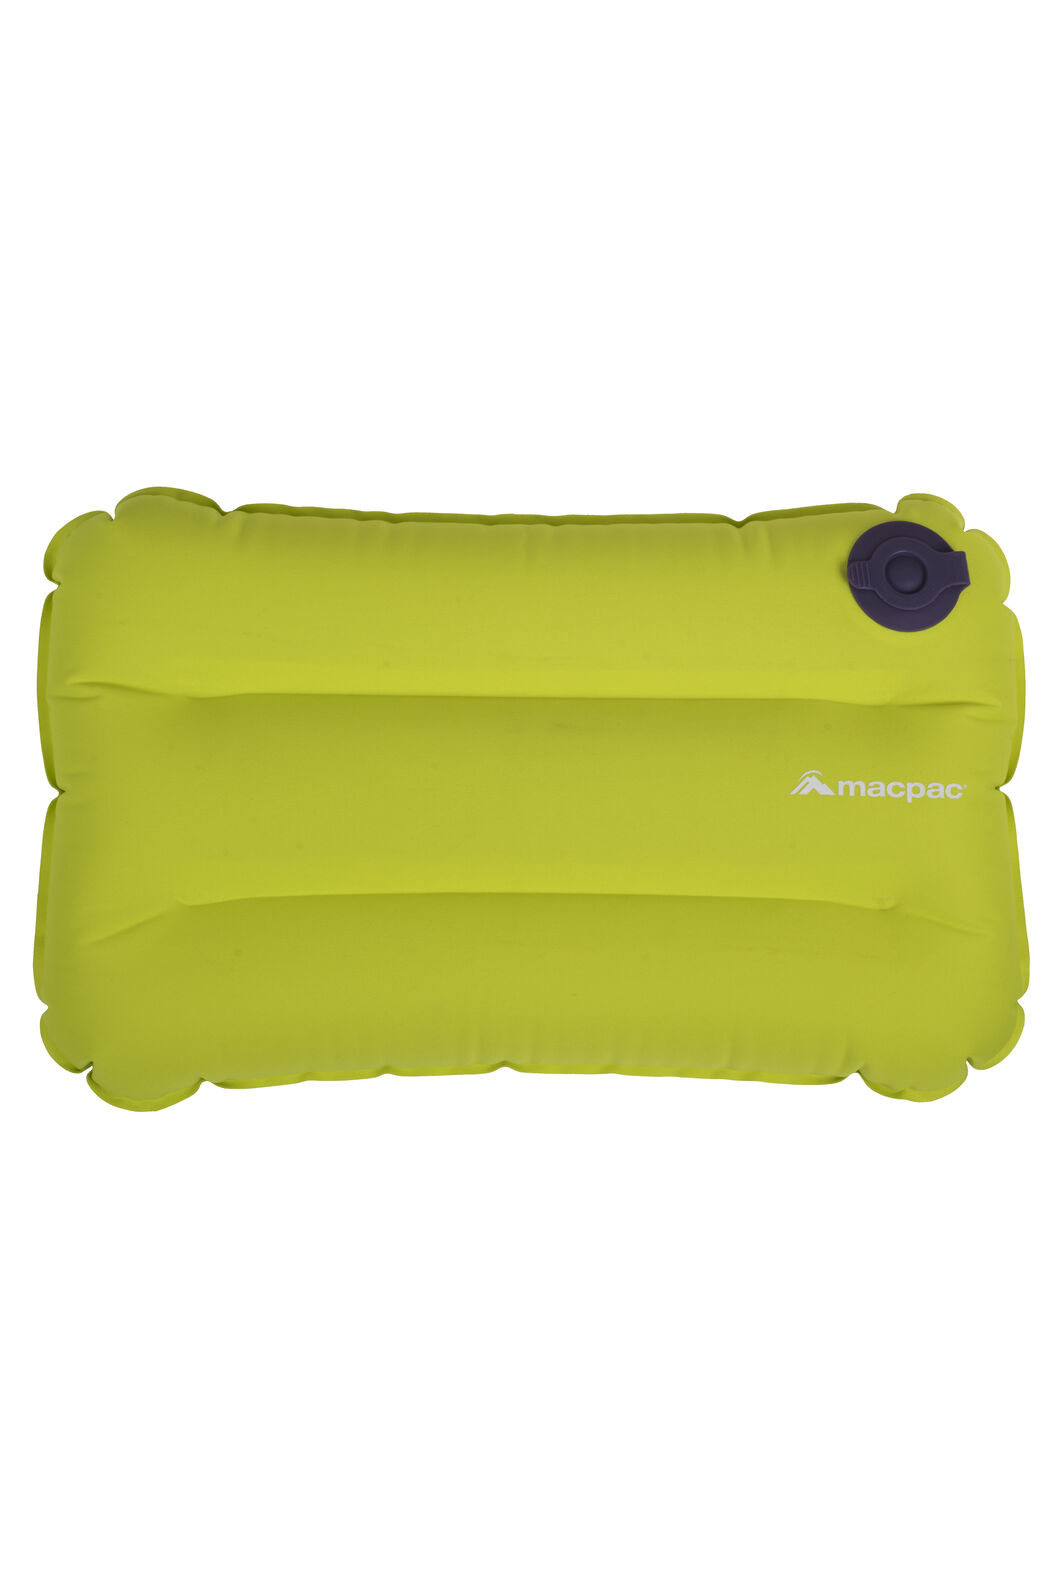 Macpac Inflatable Pillow, Green, hi-res